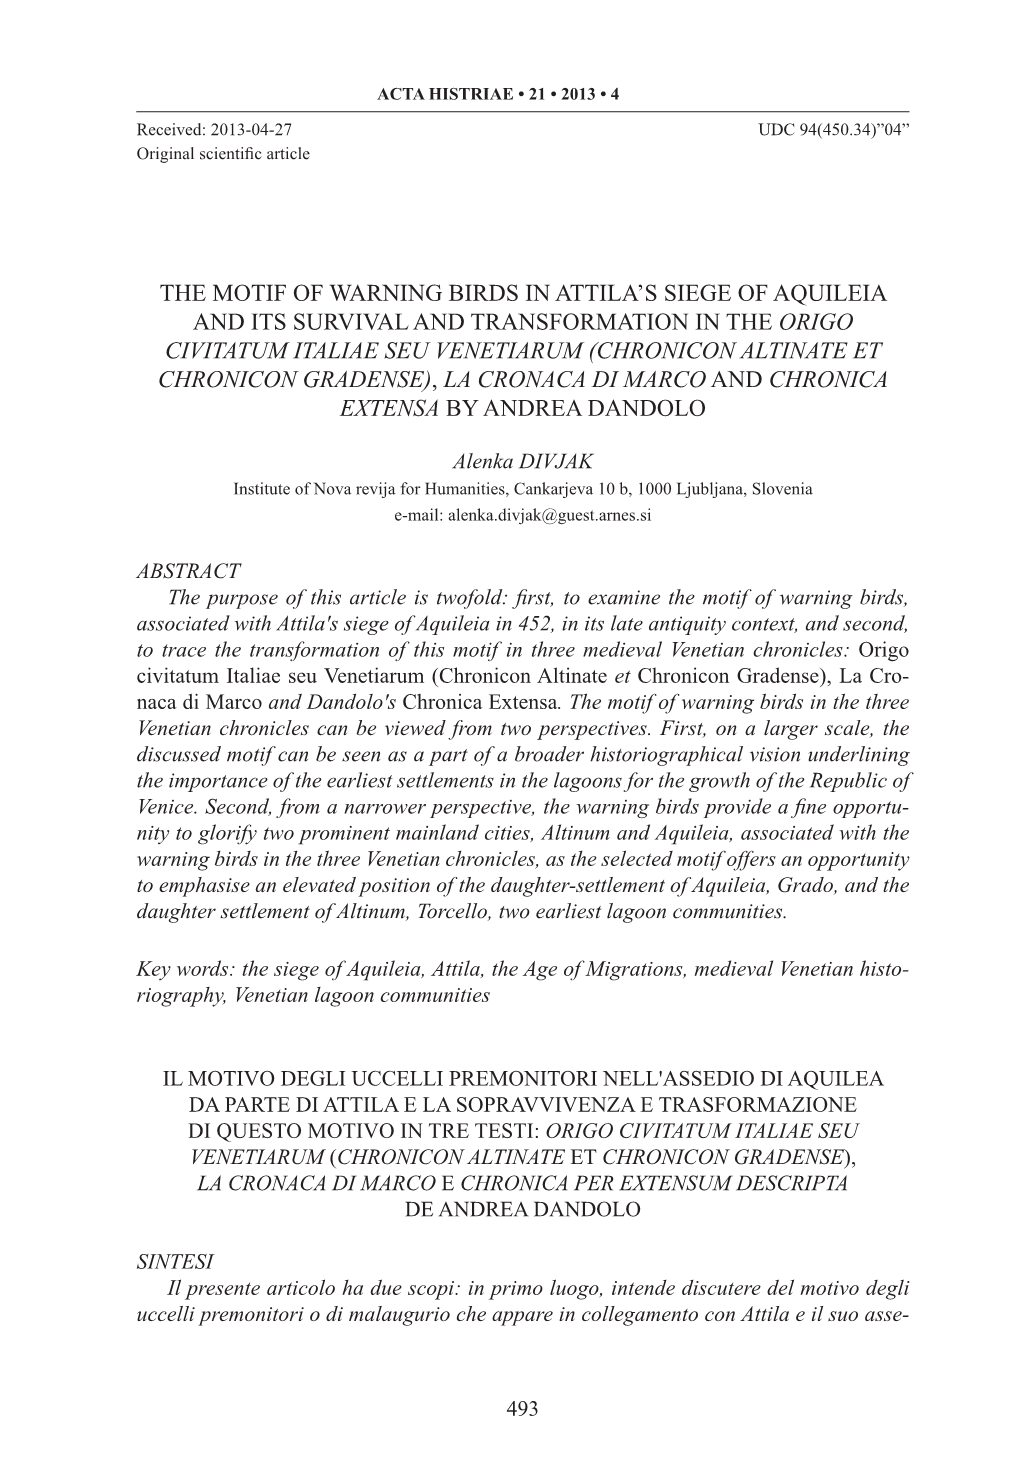 The Motif of Warning Birds in Attila's Siege of Aquileia and Its Survival and Transformation in the Origo Civitatum Italiae Se